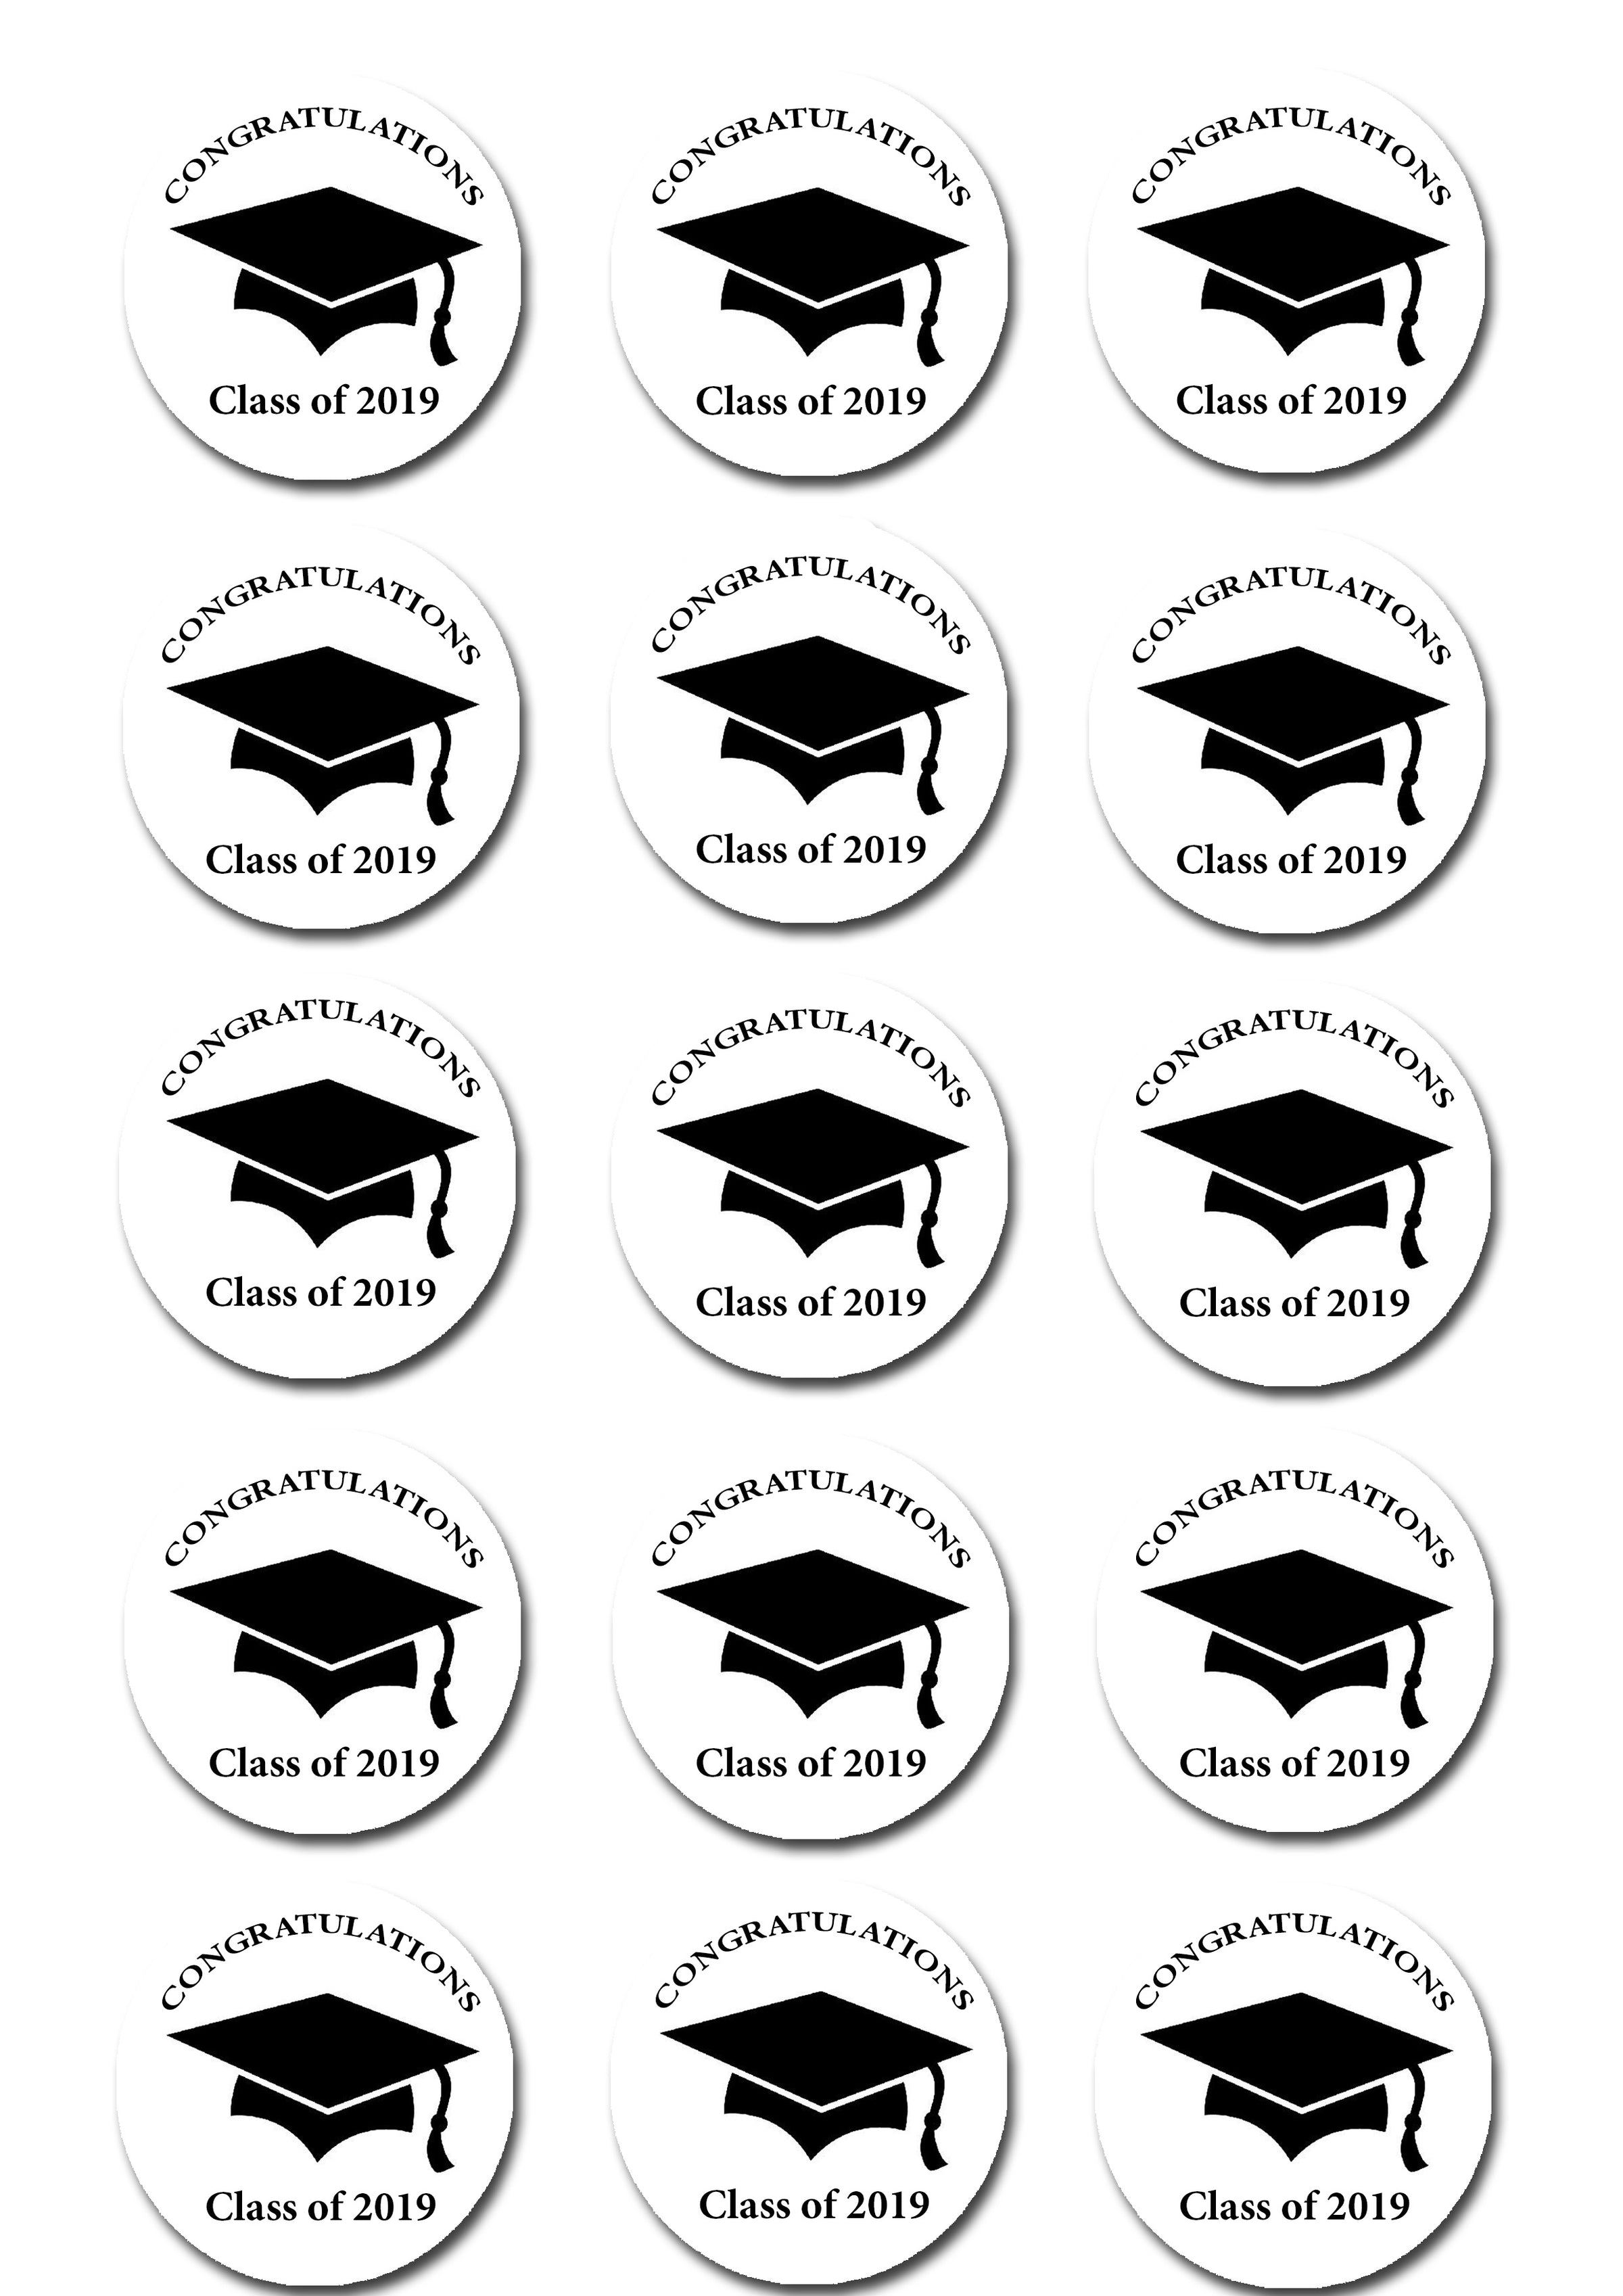 Graduation Cupcake Toppers Printable